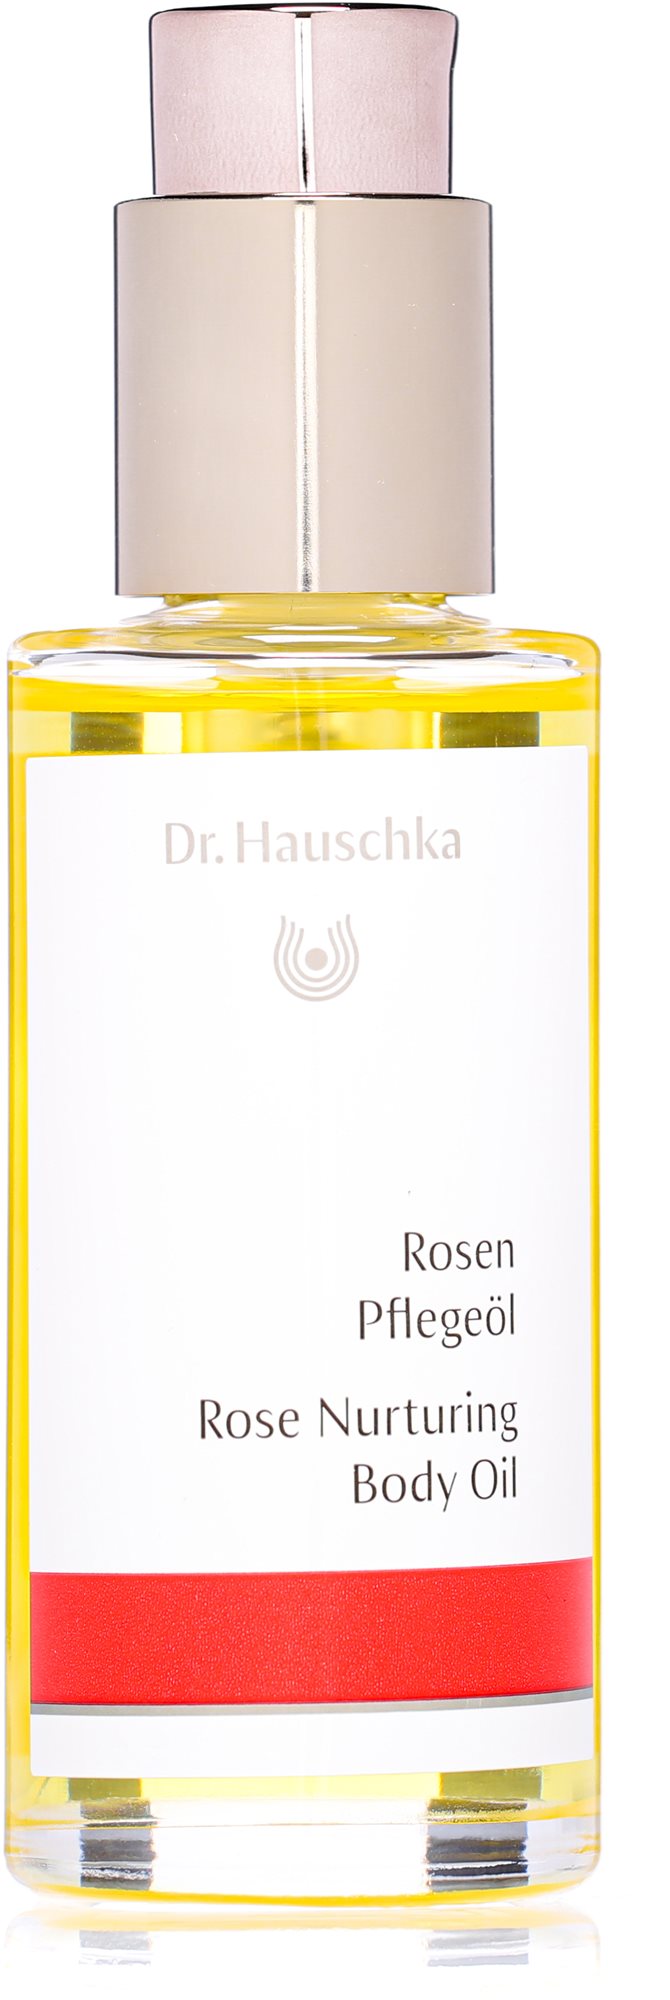 Masszázsolaj DR. HAUSCHKA Rose Nurturing Body Oil 75 ml